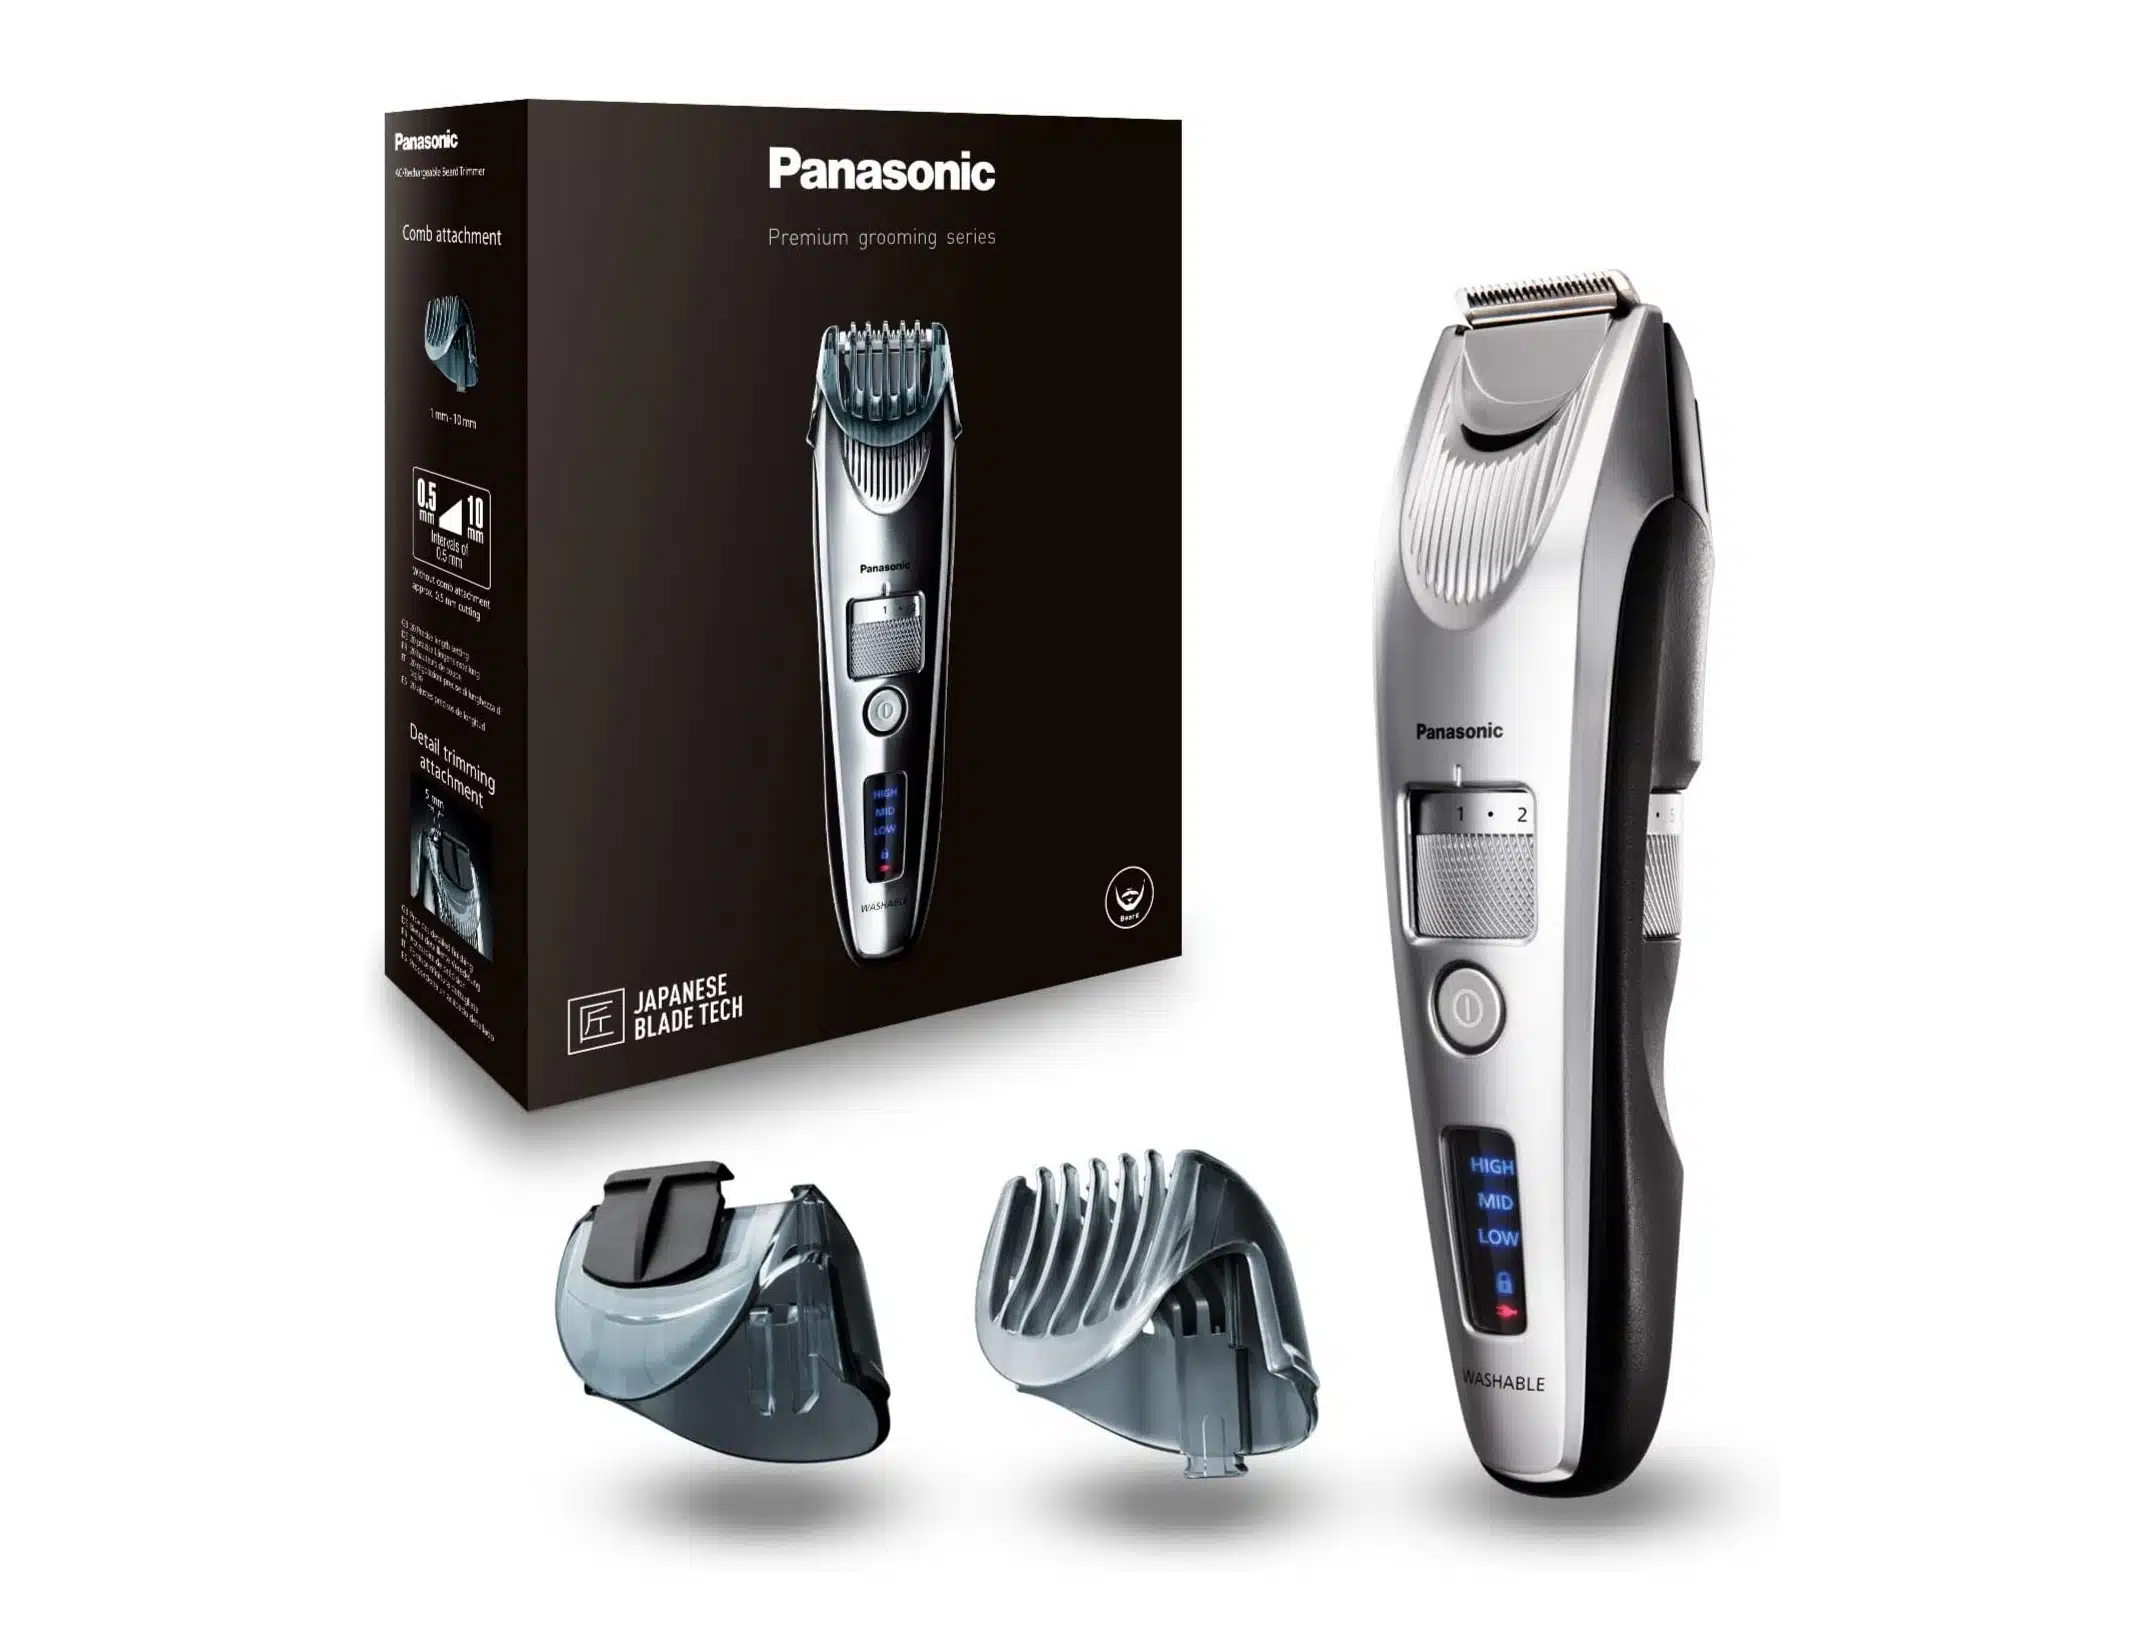 Meilleure tondeuse barbe - Panasonic Personalcare ER-SB60-S803